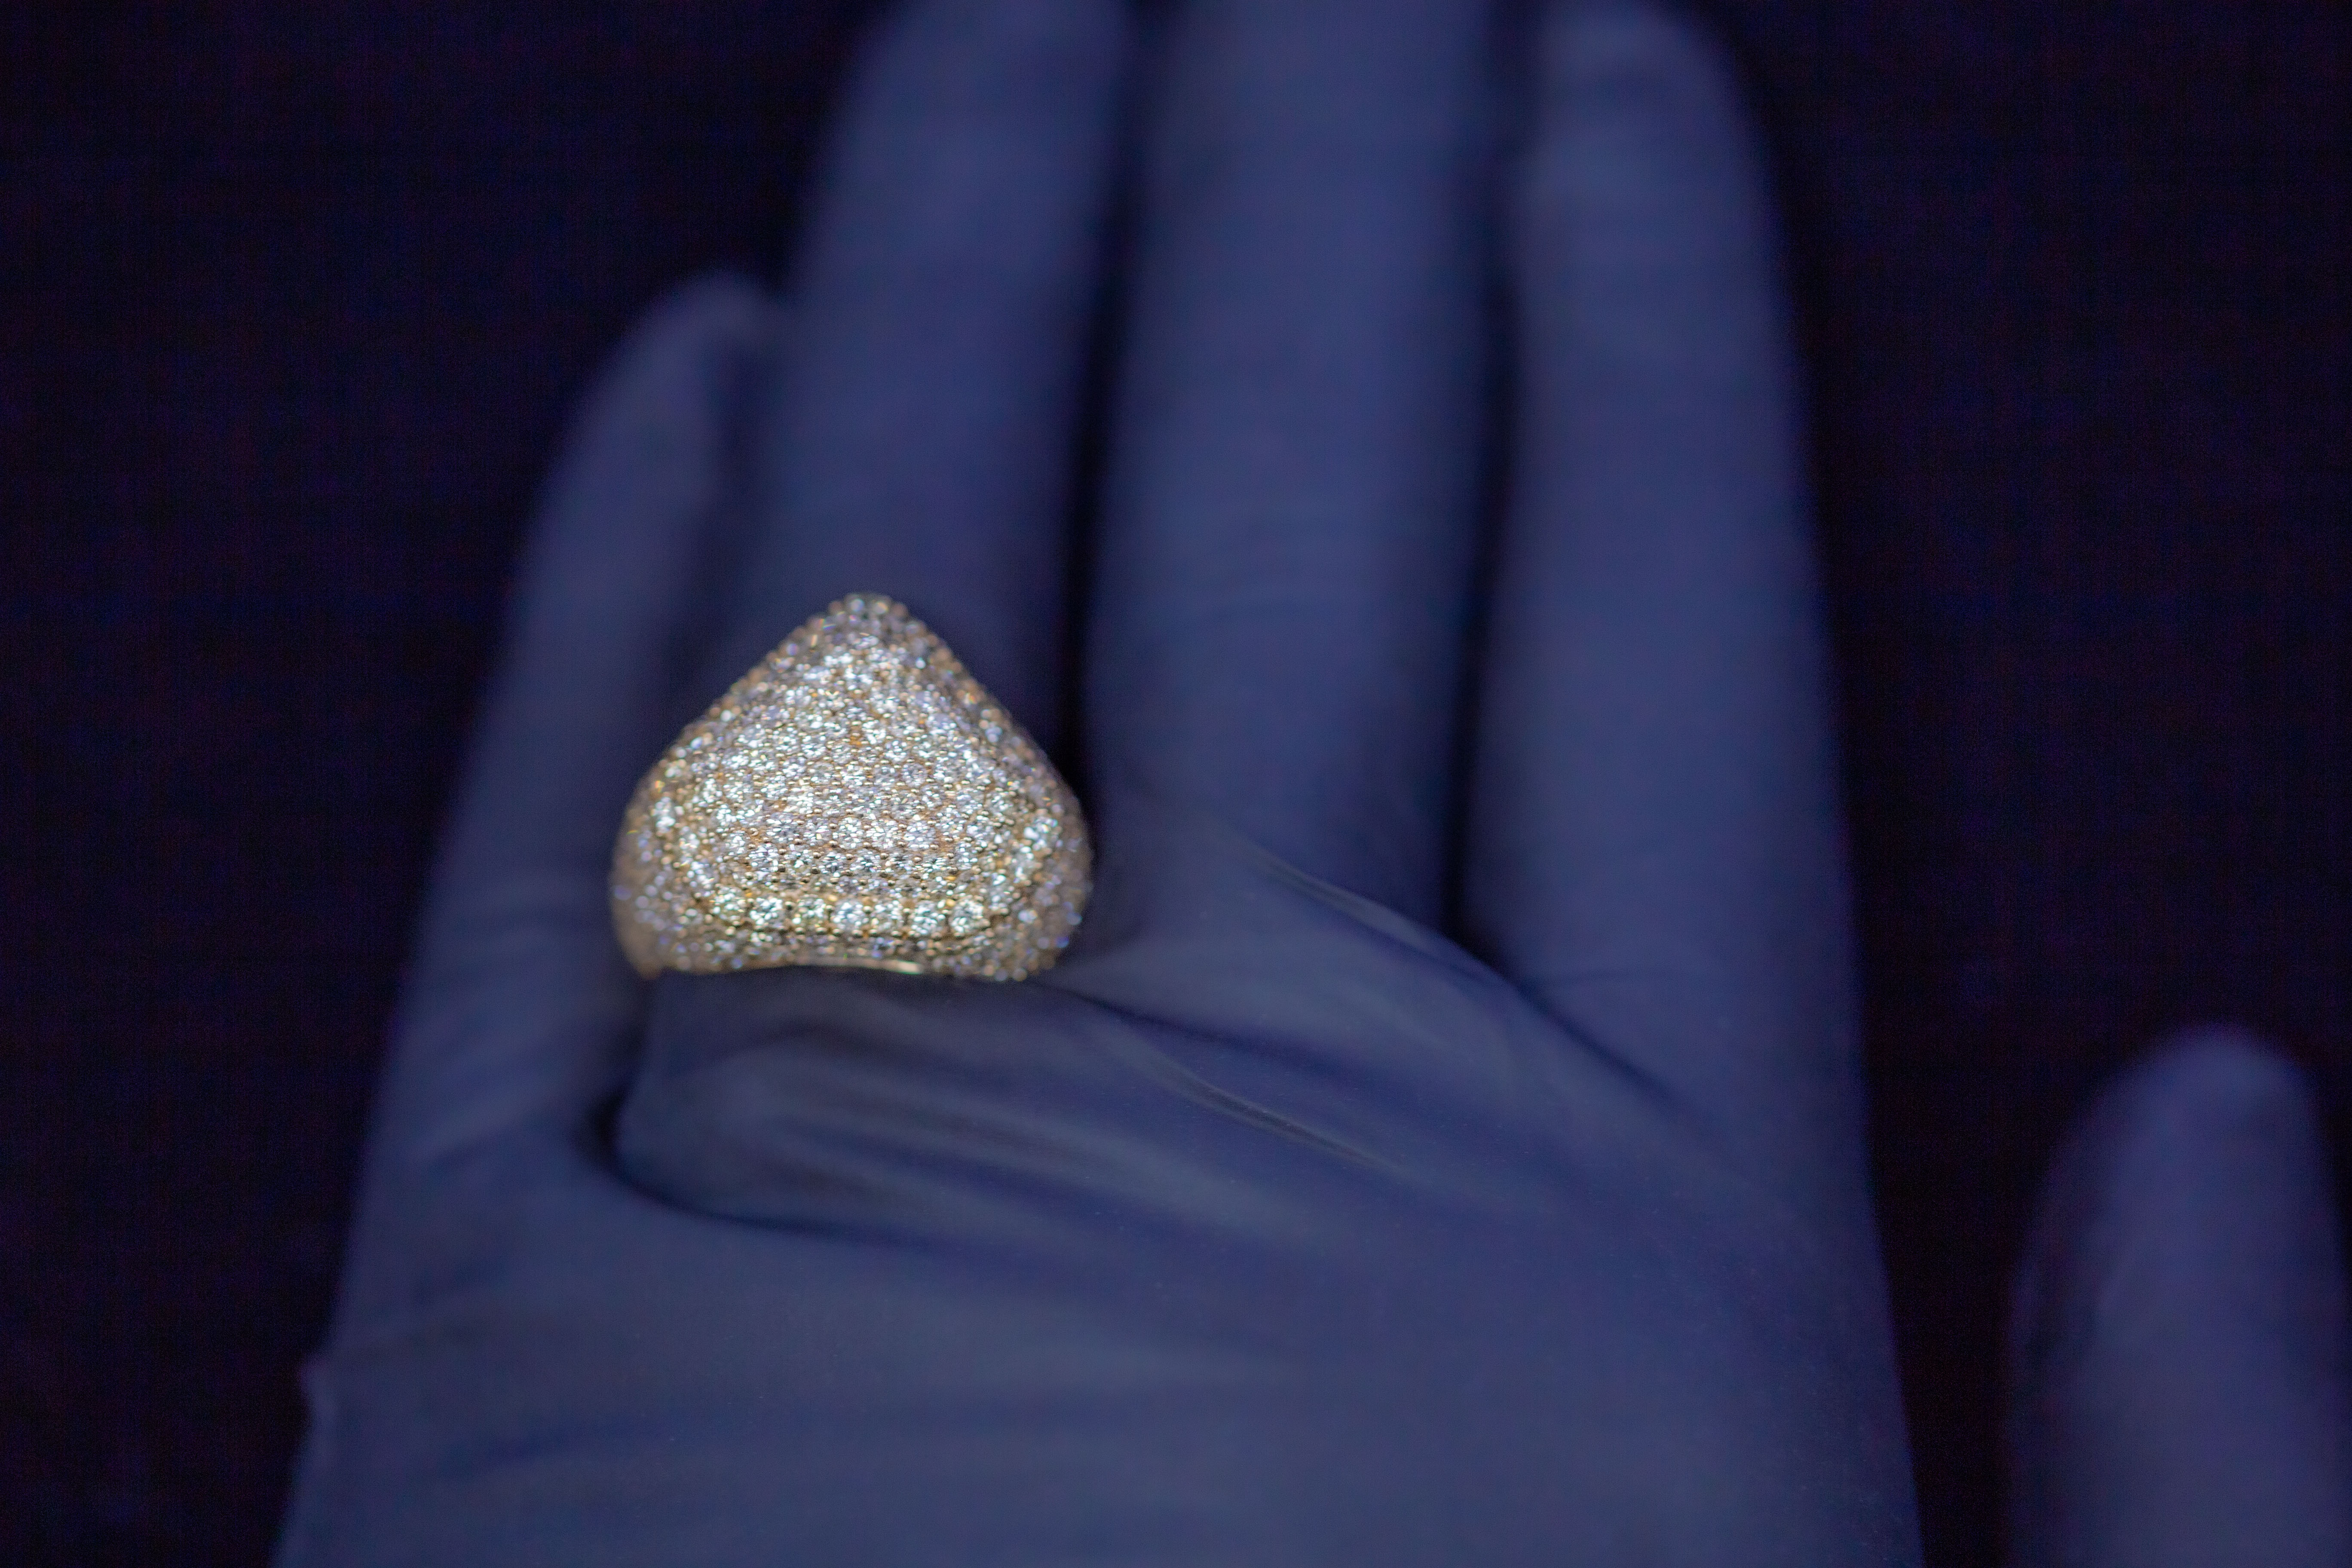 5.50 CT. Diamond Ring in 10K Gold - White Carat Diamonds 